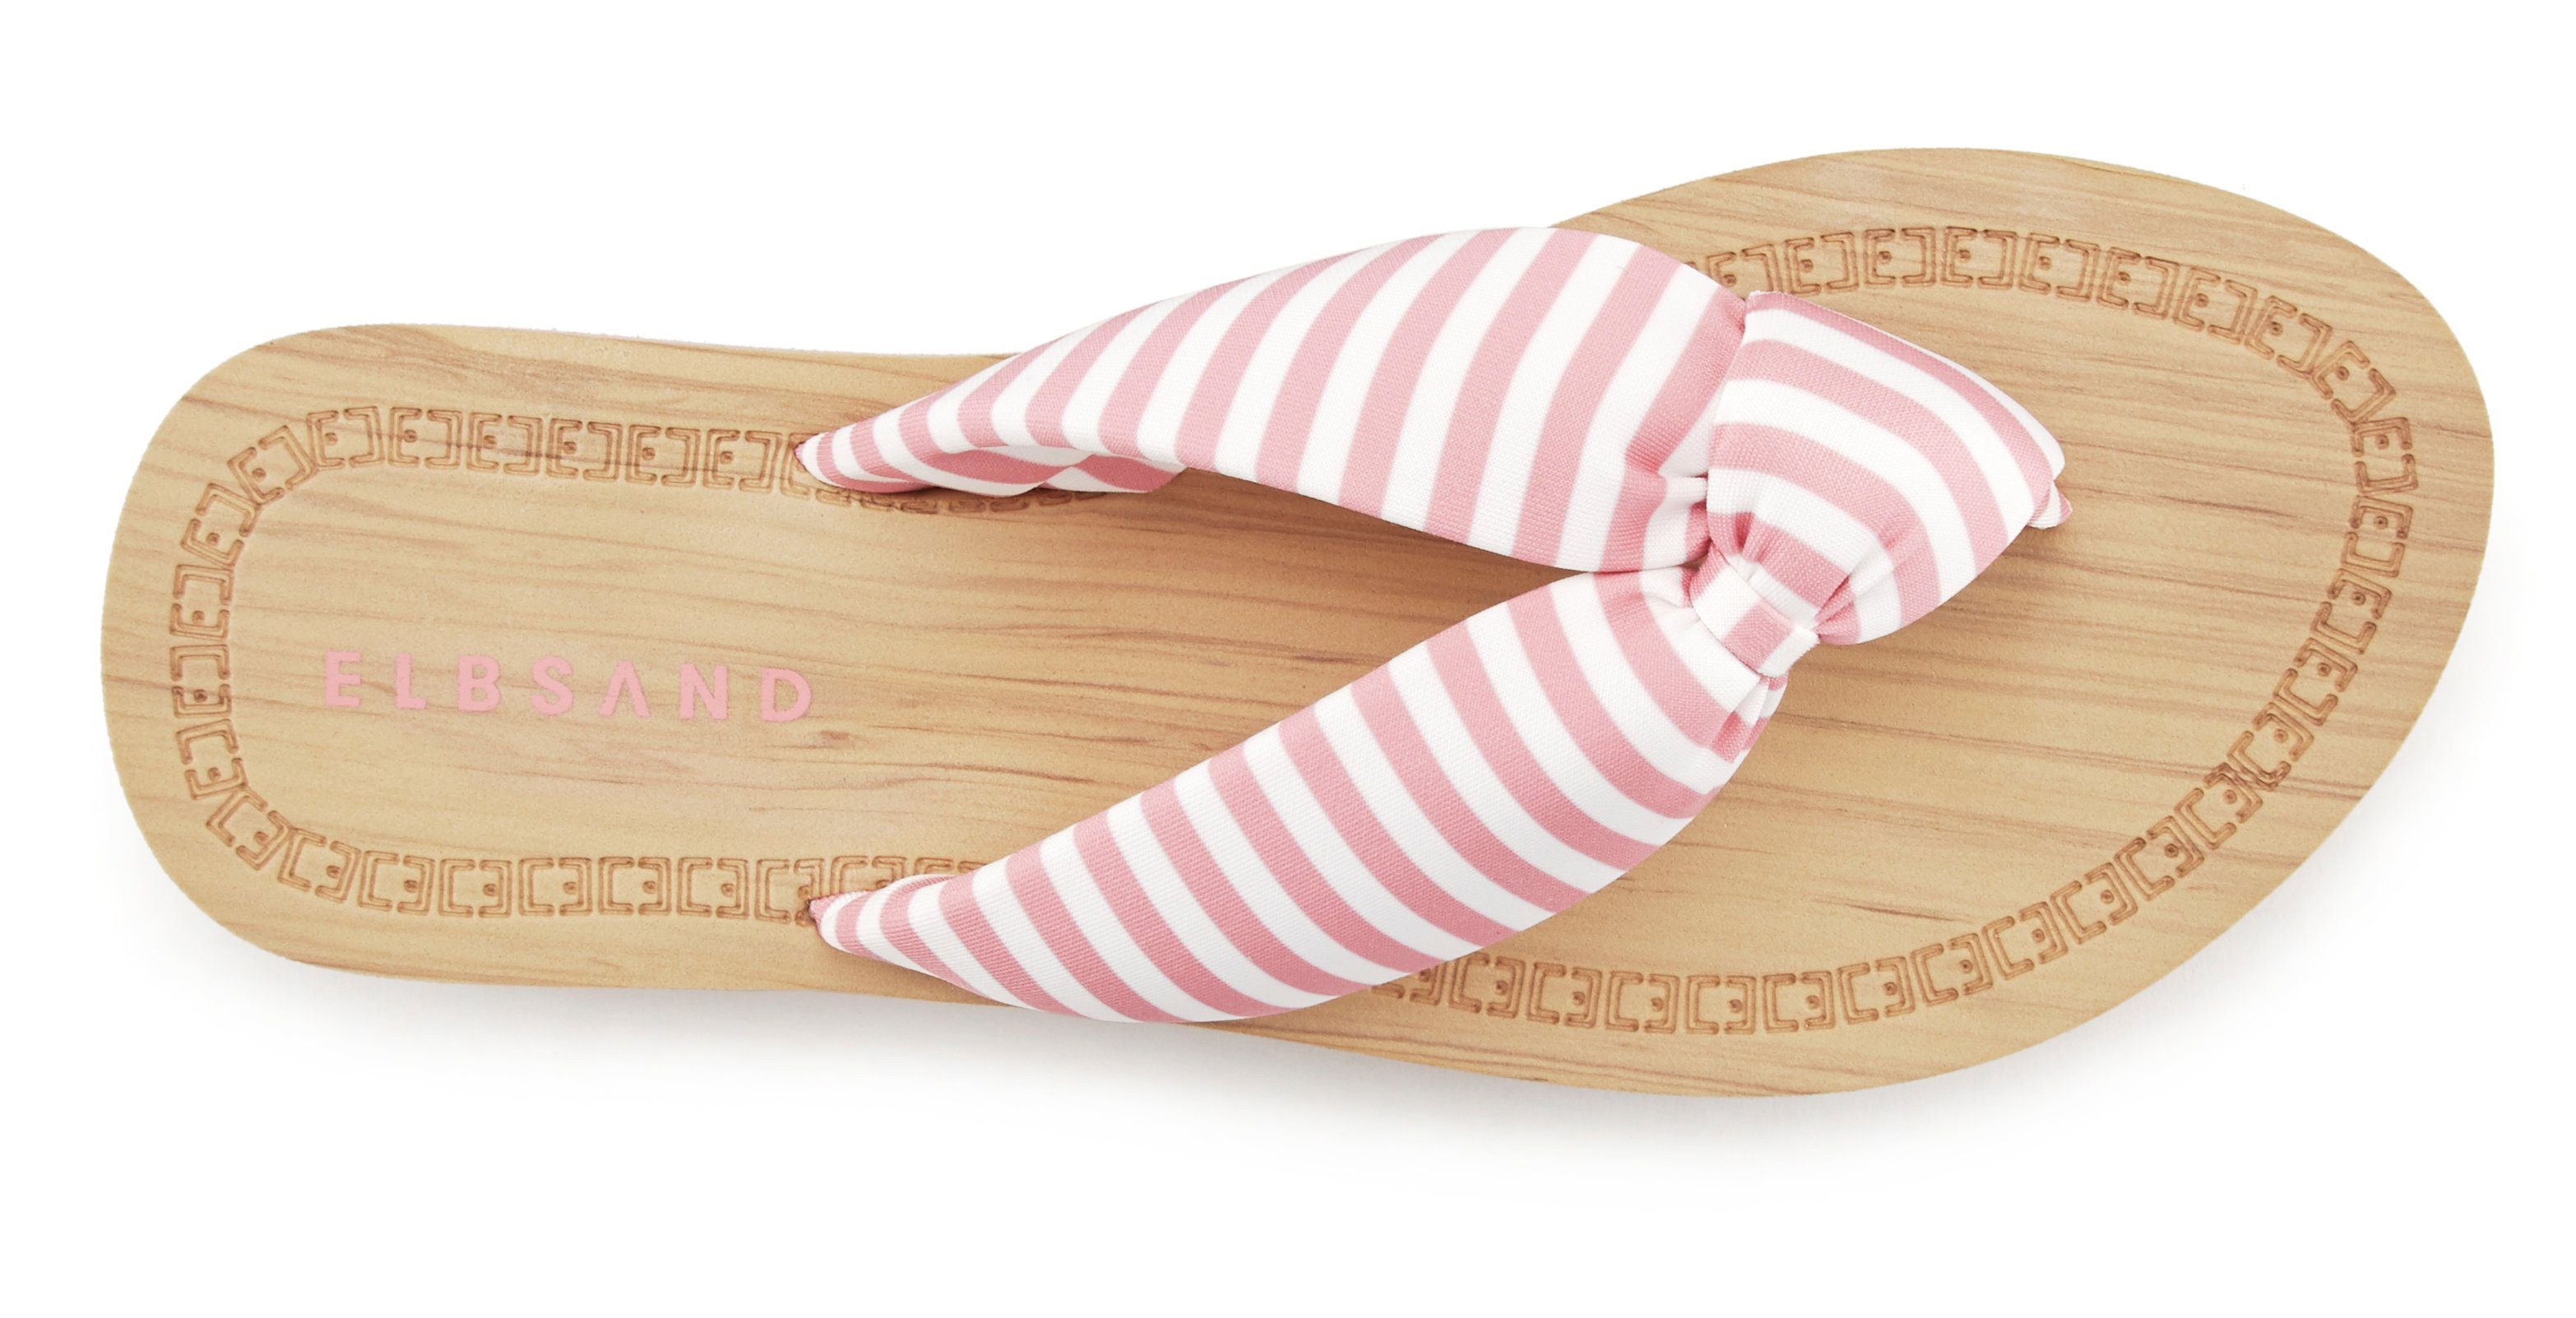 Elbsand Badezehentrenner Sandale, Pantolette, rosa-gestreift VEGAN ultraleicht Badeschuh